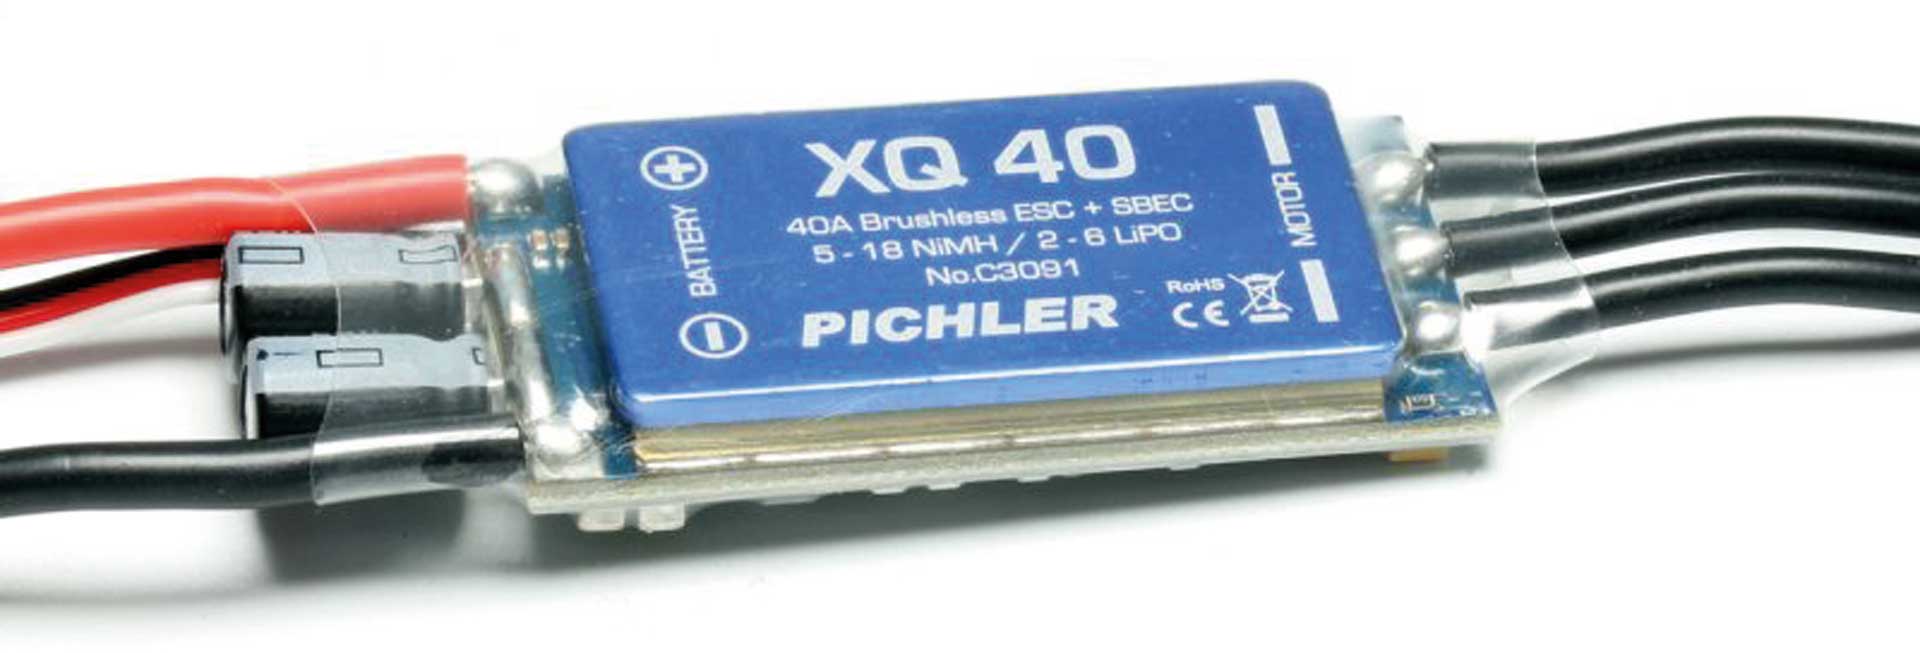 PICHLER XQ 40 Brushless Regler 2-6S 40A 5A BEC